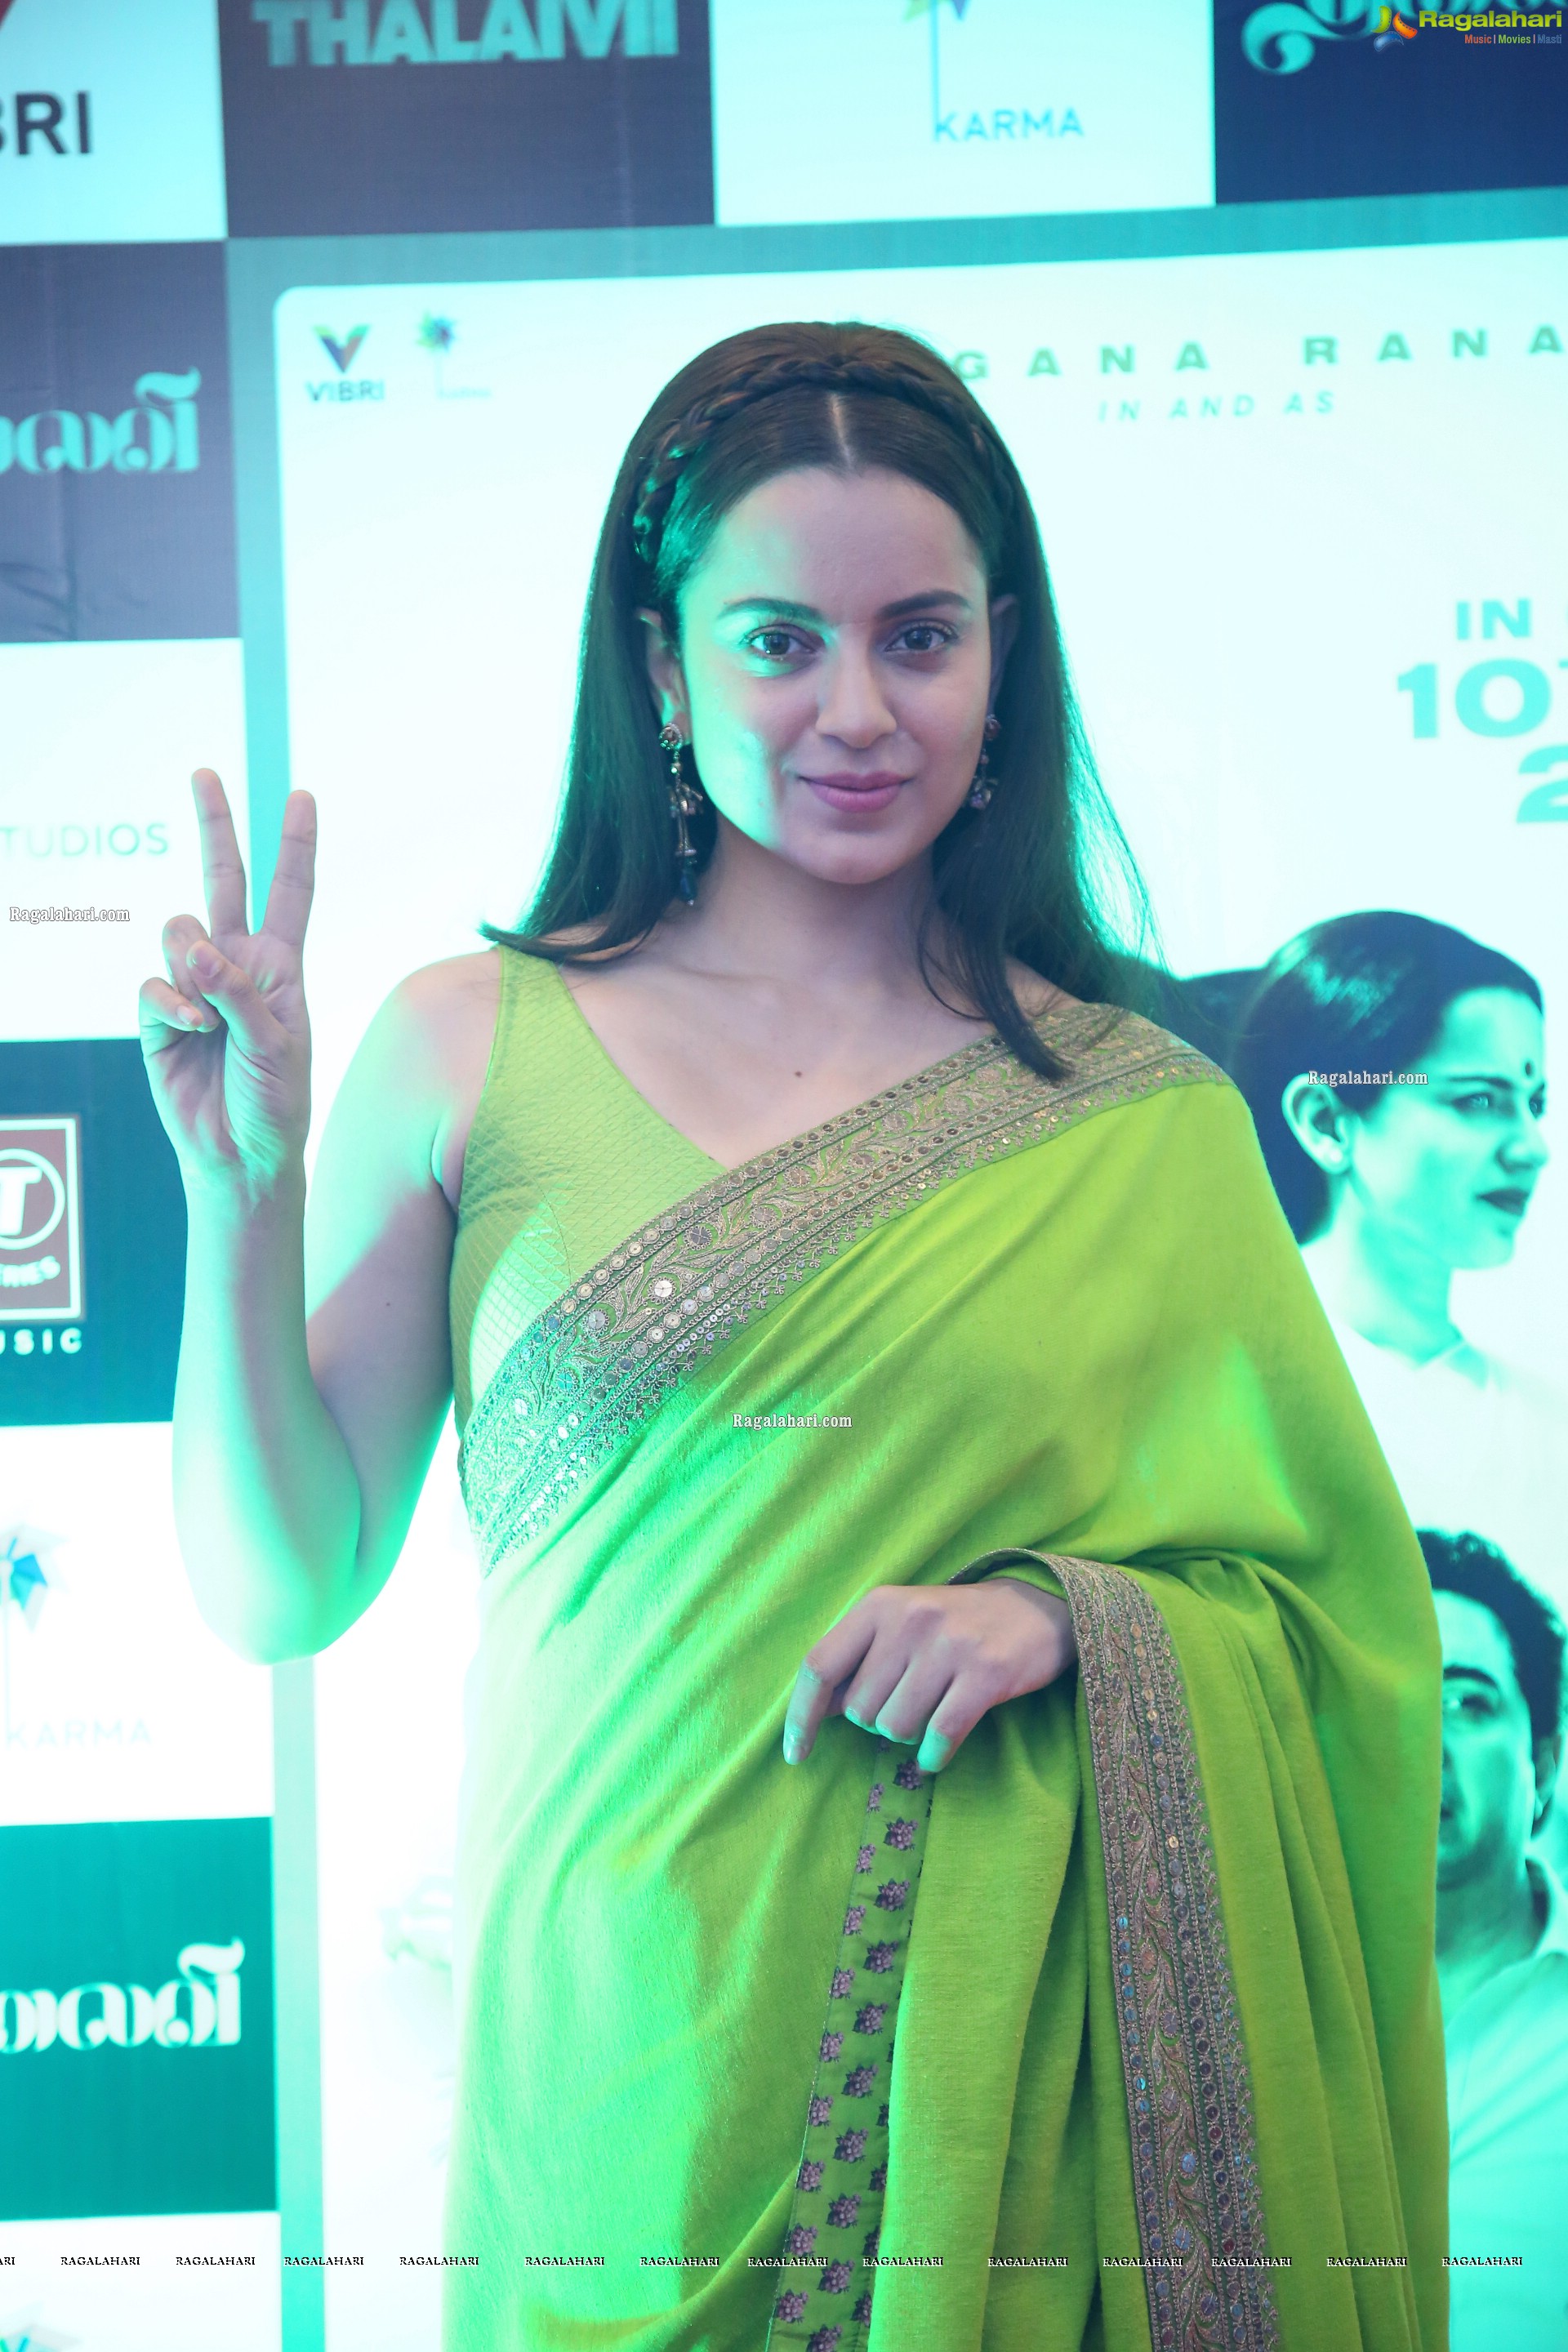 Kangana Ranaut at Talaivi Movie Pre-Release Event, HD Photo Gallery